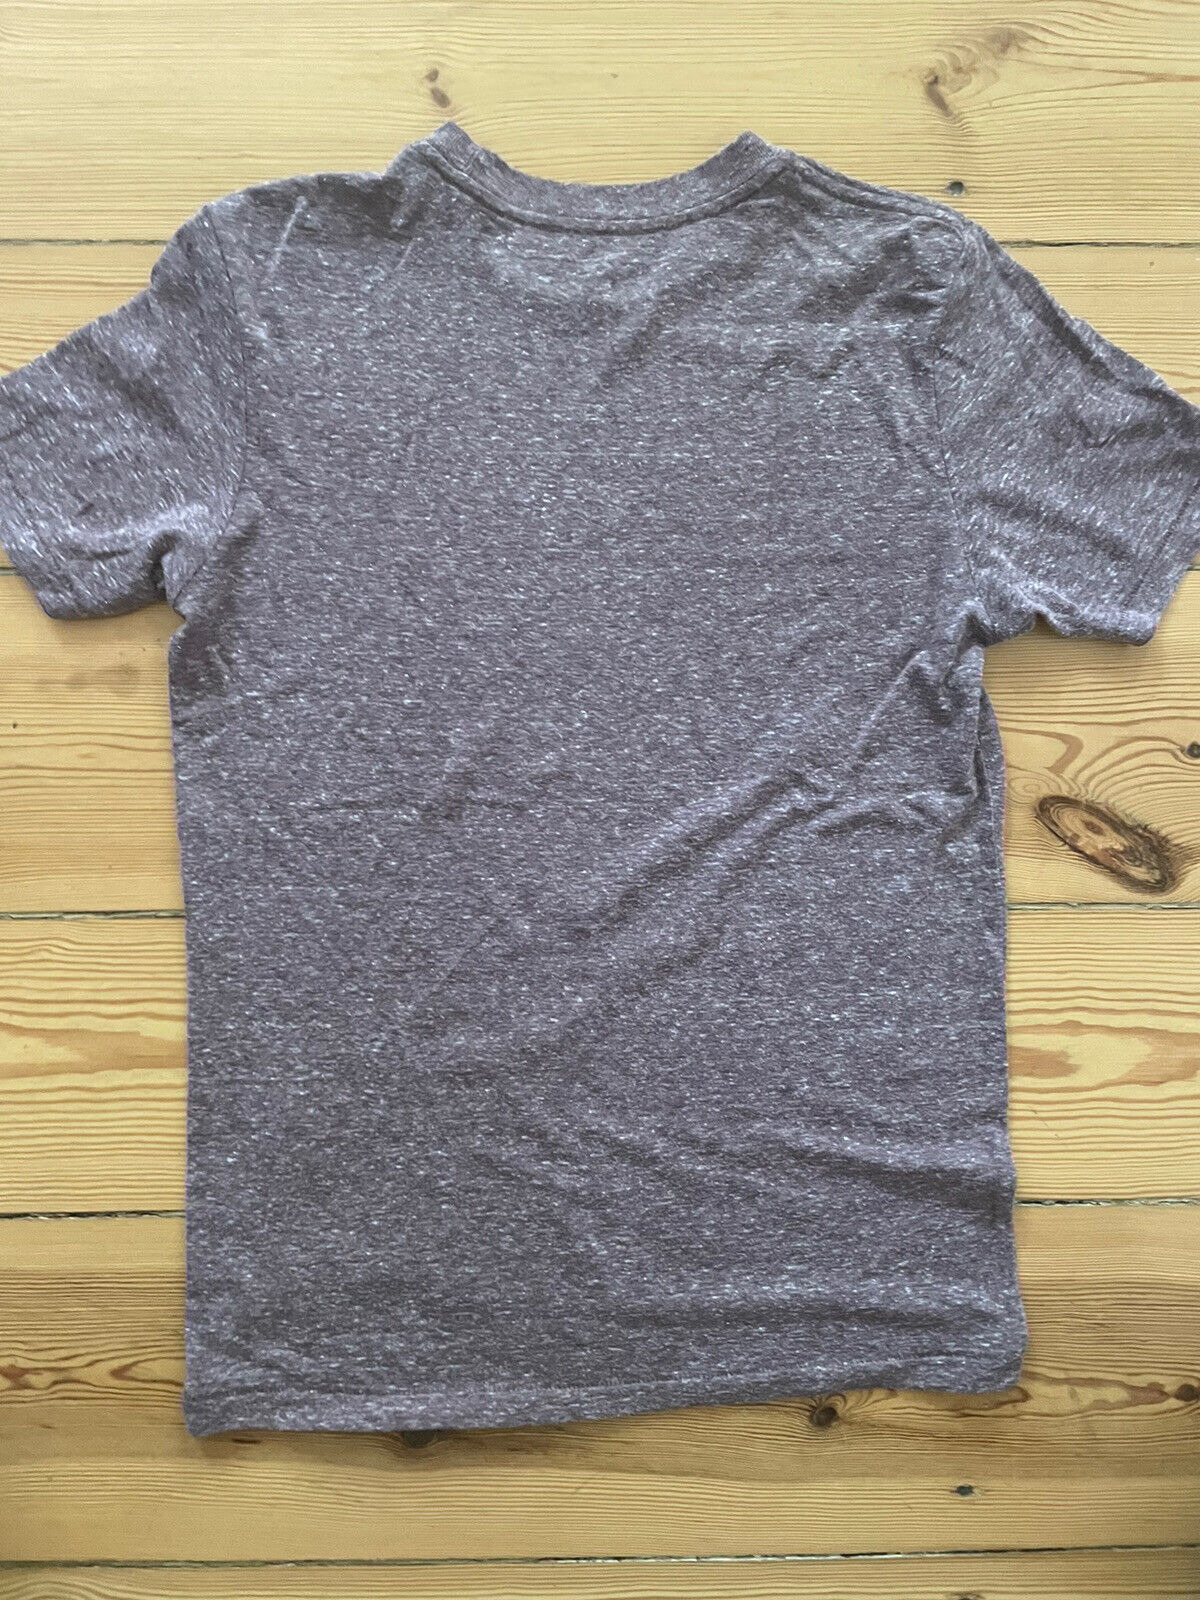 Brooklyn Calling Herren T-Shirt | eBay